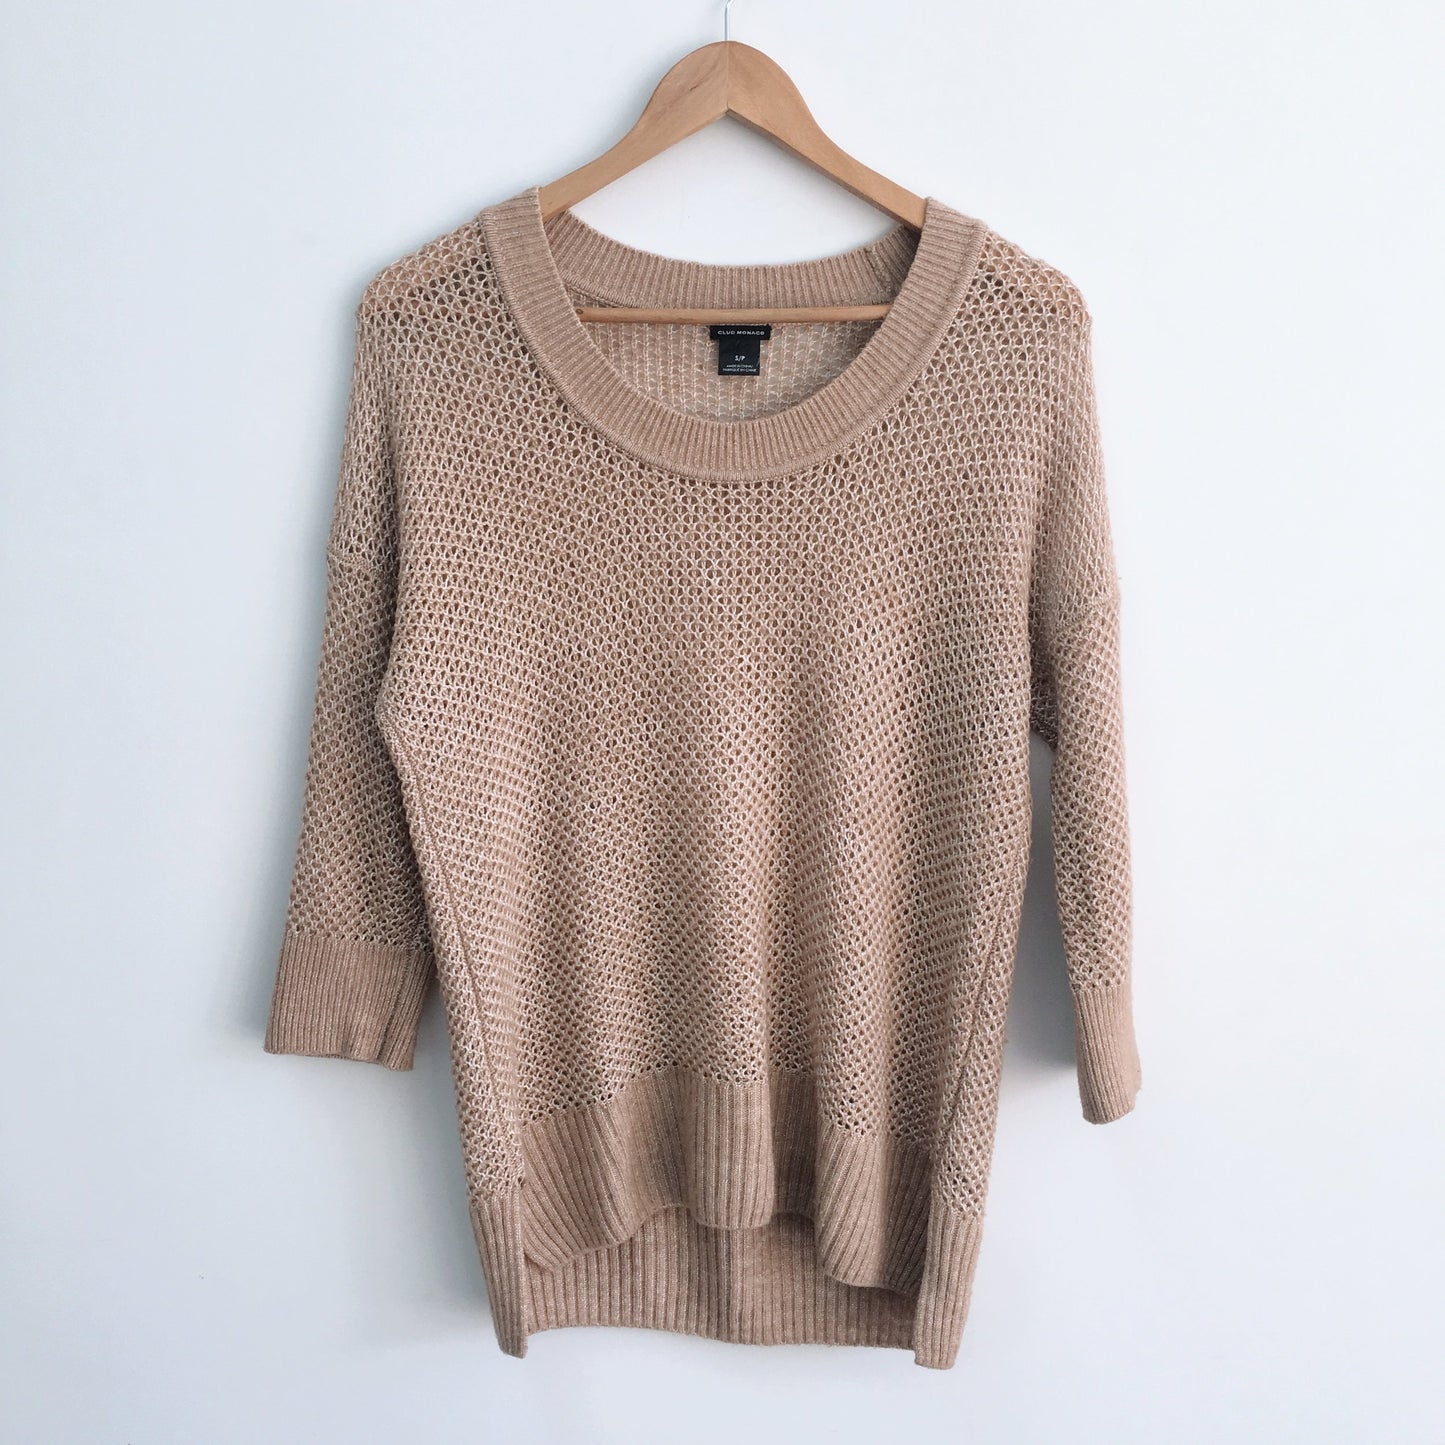 Club Monaco Knit Sweater - size Small